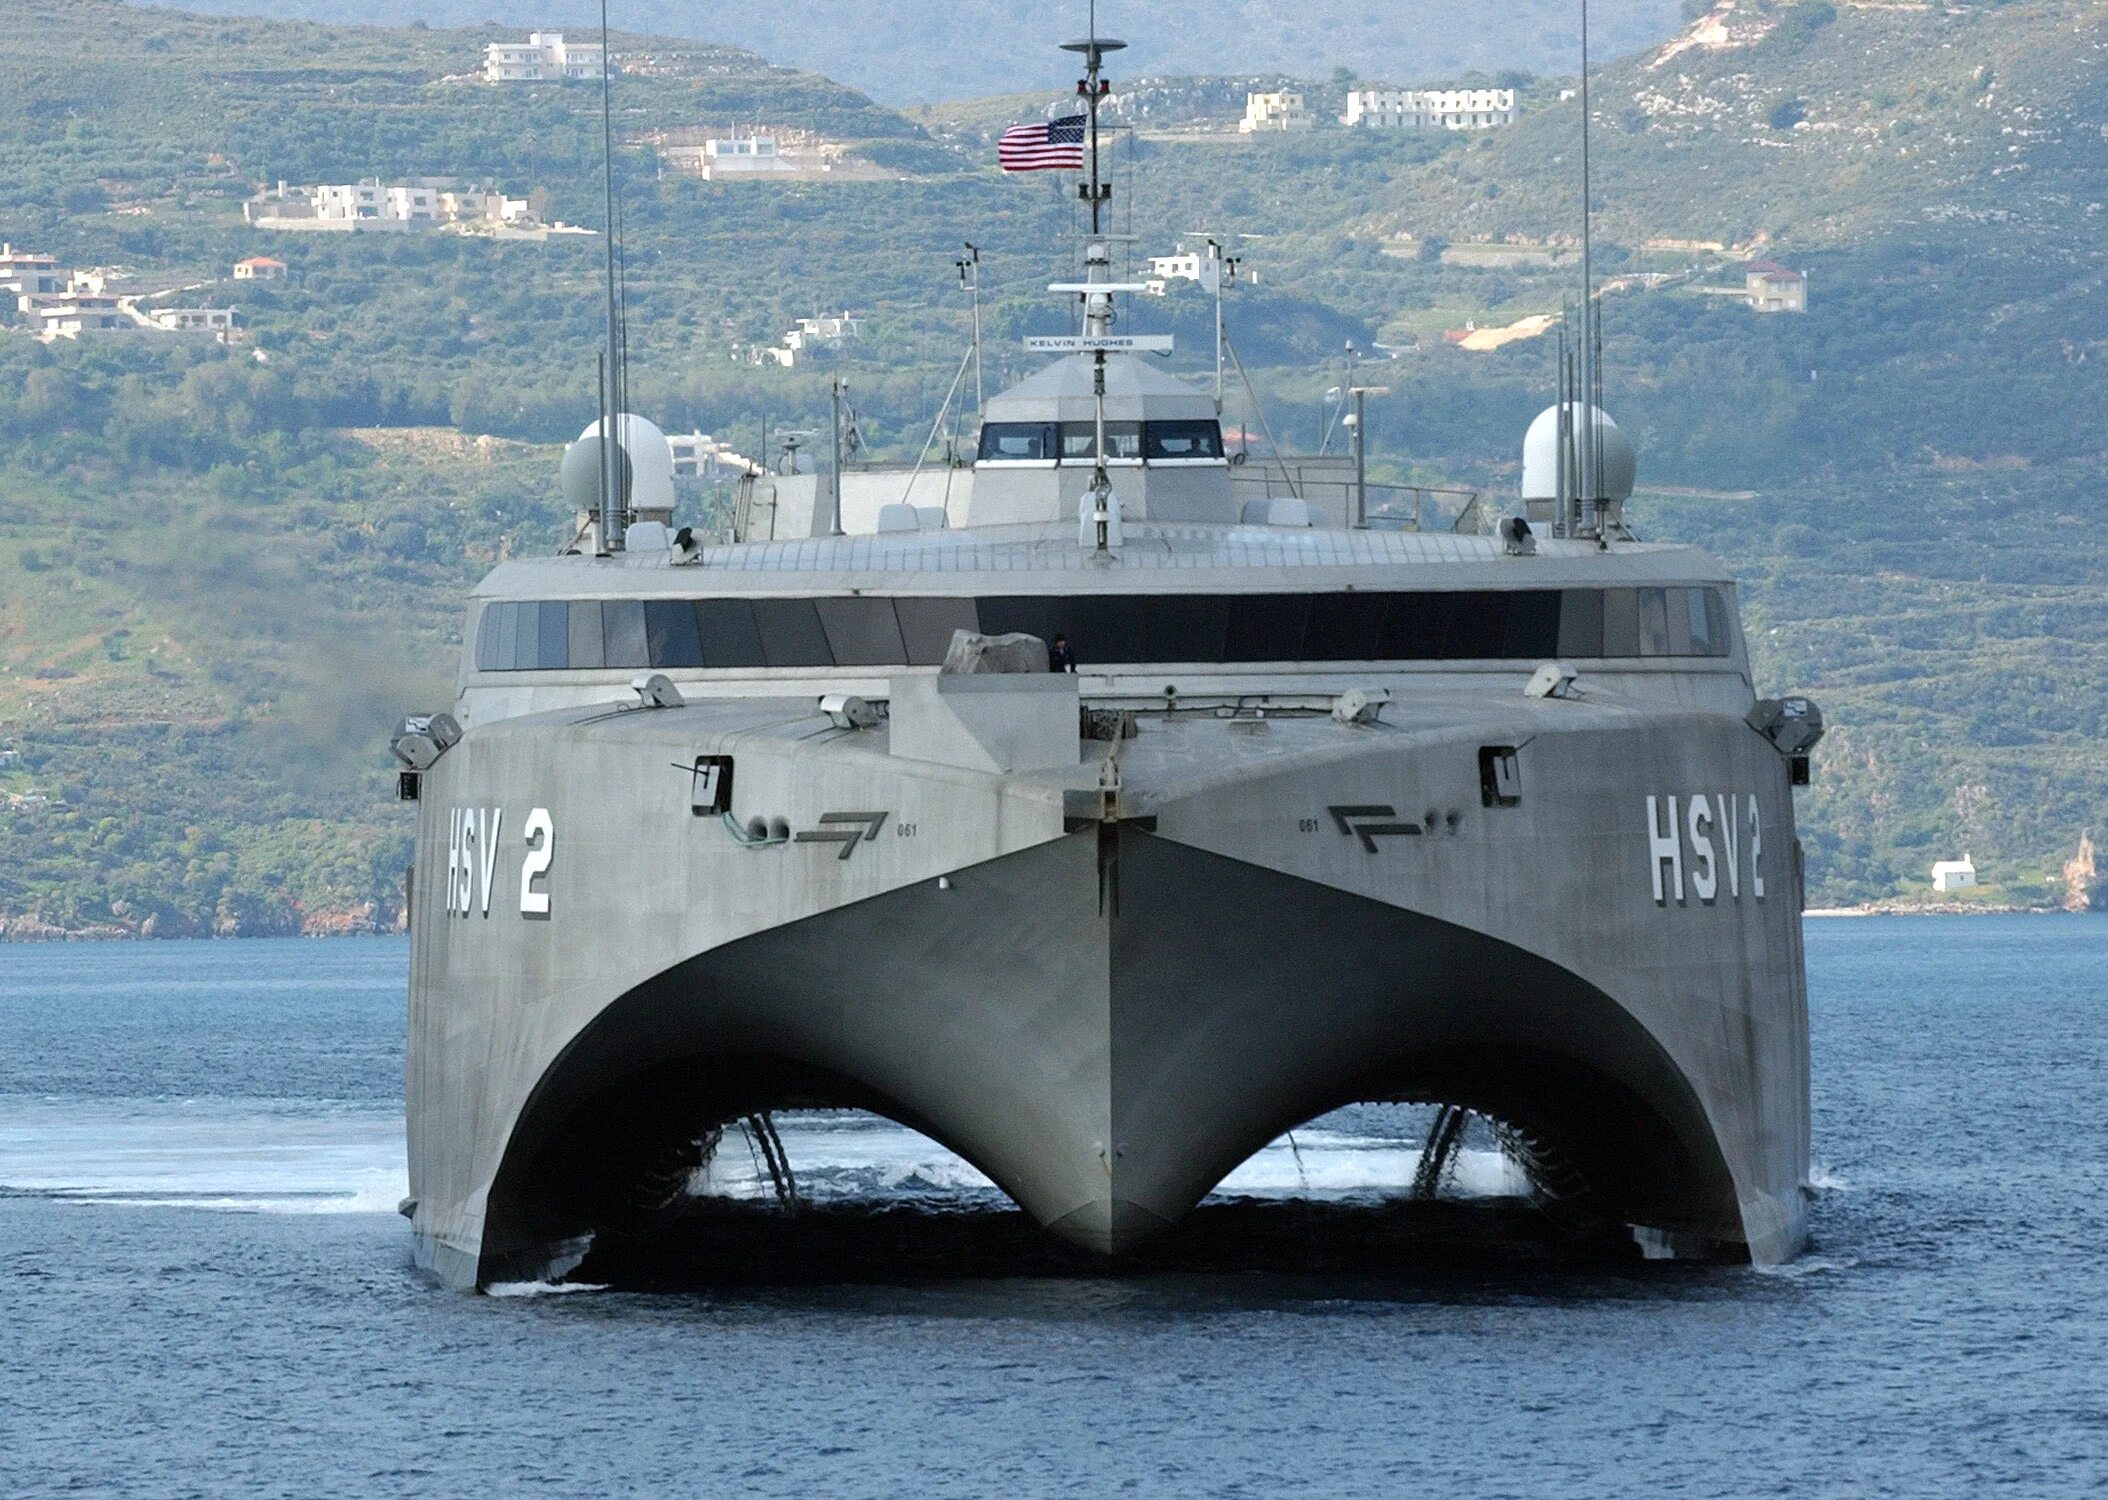 Гибридный катамаран HSV-2 Swift. Военный корабль «HSV 2 Swift». Военные корабли катамараны ВМС США. Корабль - платформа ВМС США. Легкий военный корабль